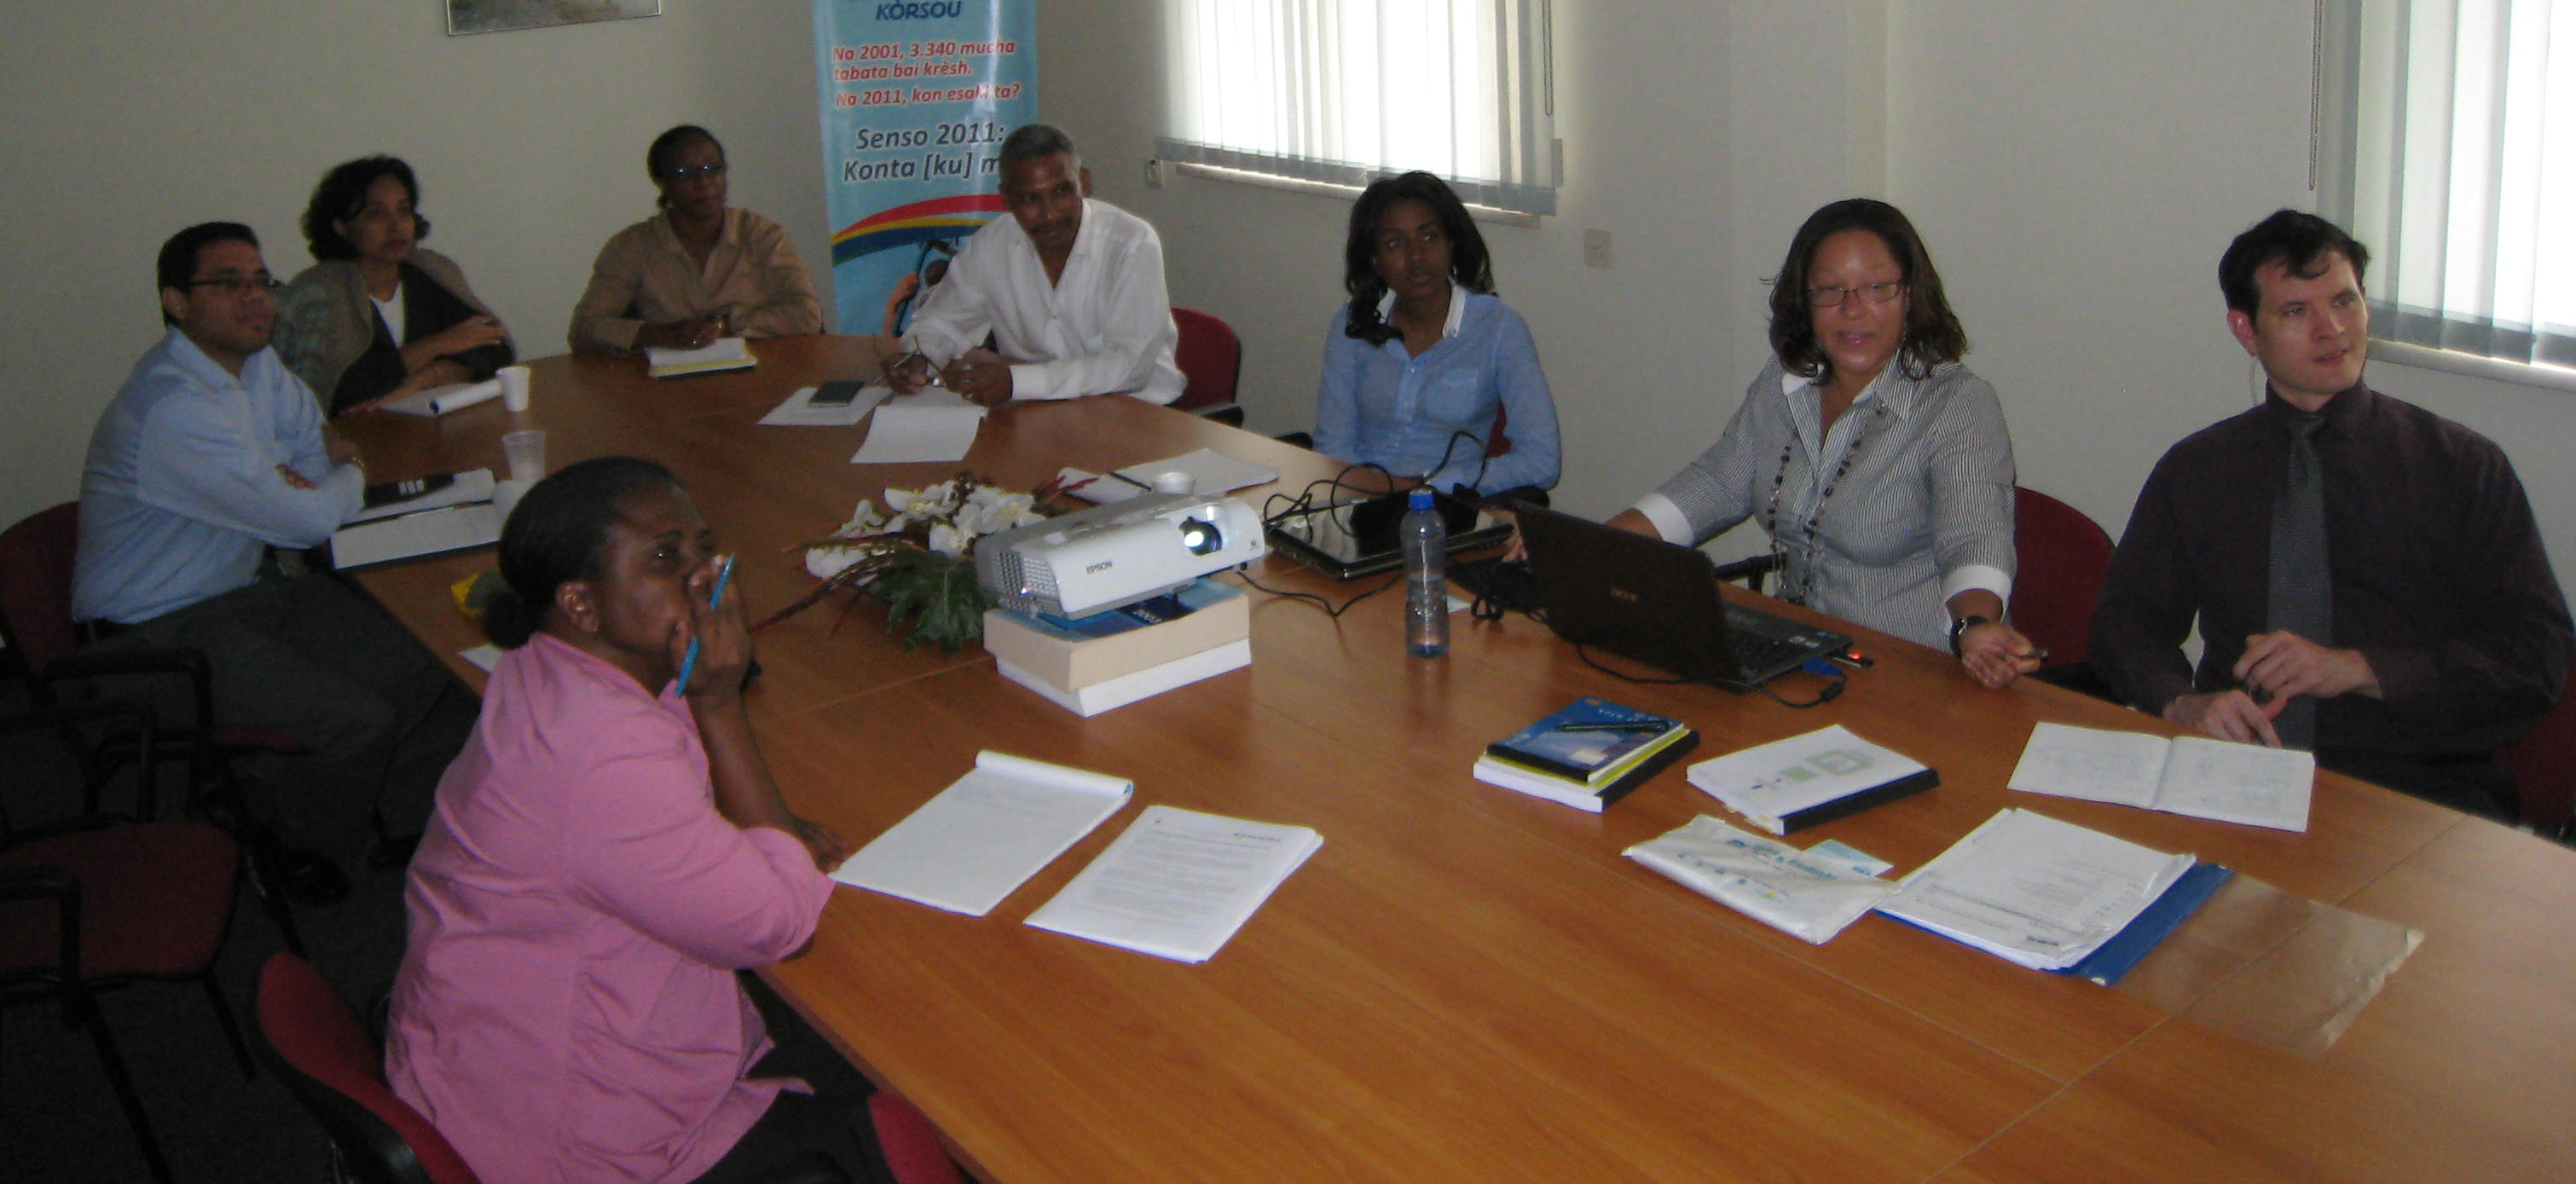 Workshop Huishoudmodule Curacao April 2011